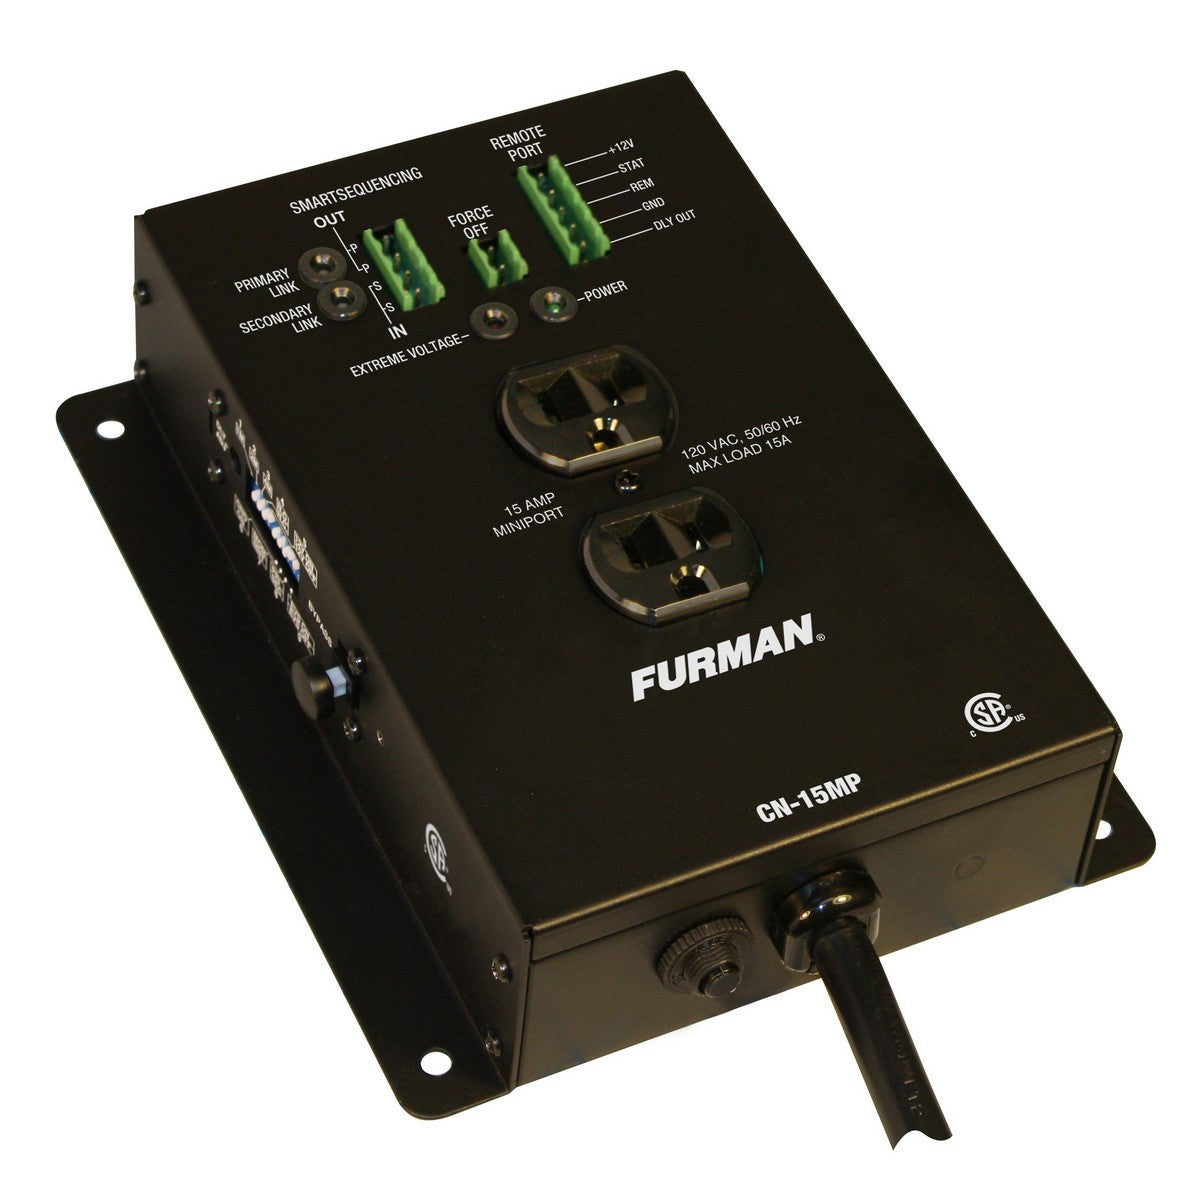 Furman CN-15MP | 15A Remote Duplex EVS Smart Sequencing 10 Feet Cord